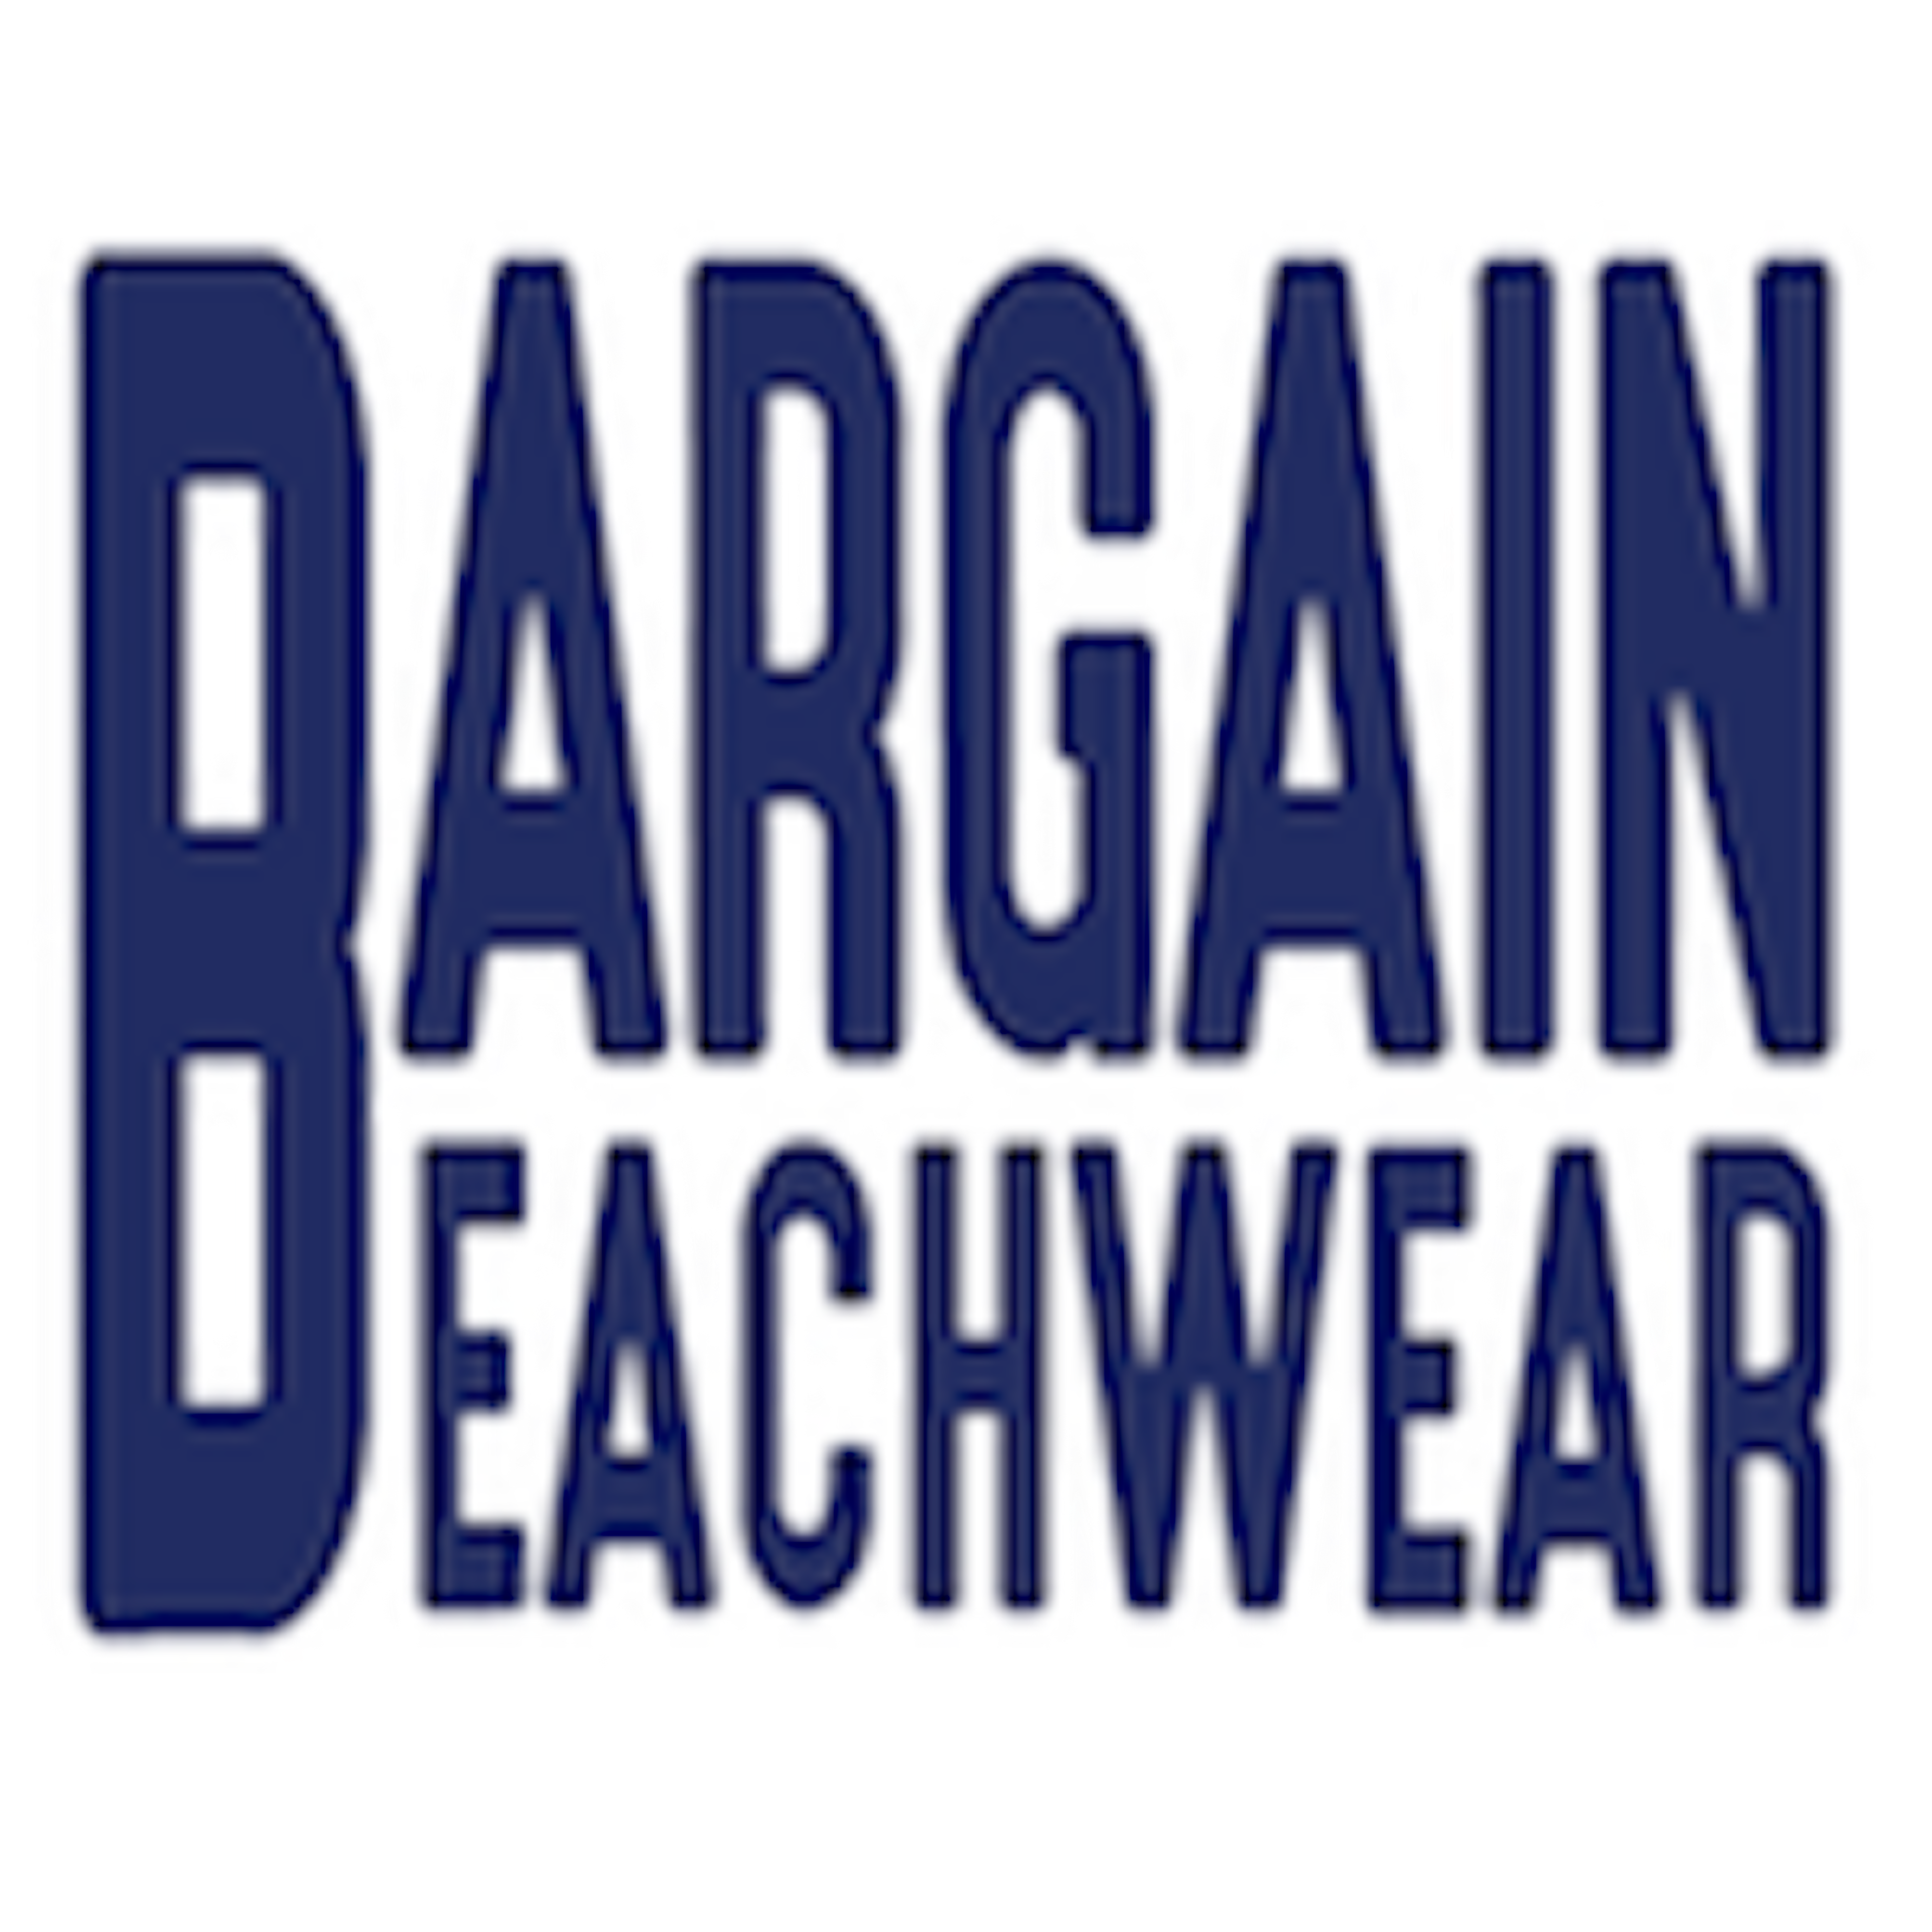 Bargain Beachwear